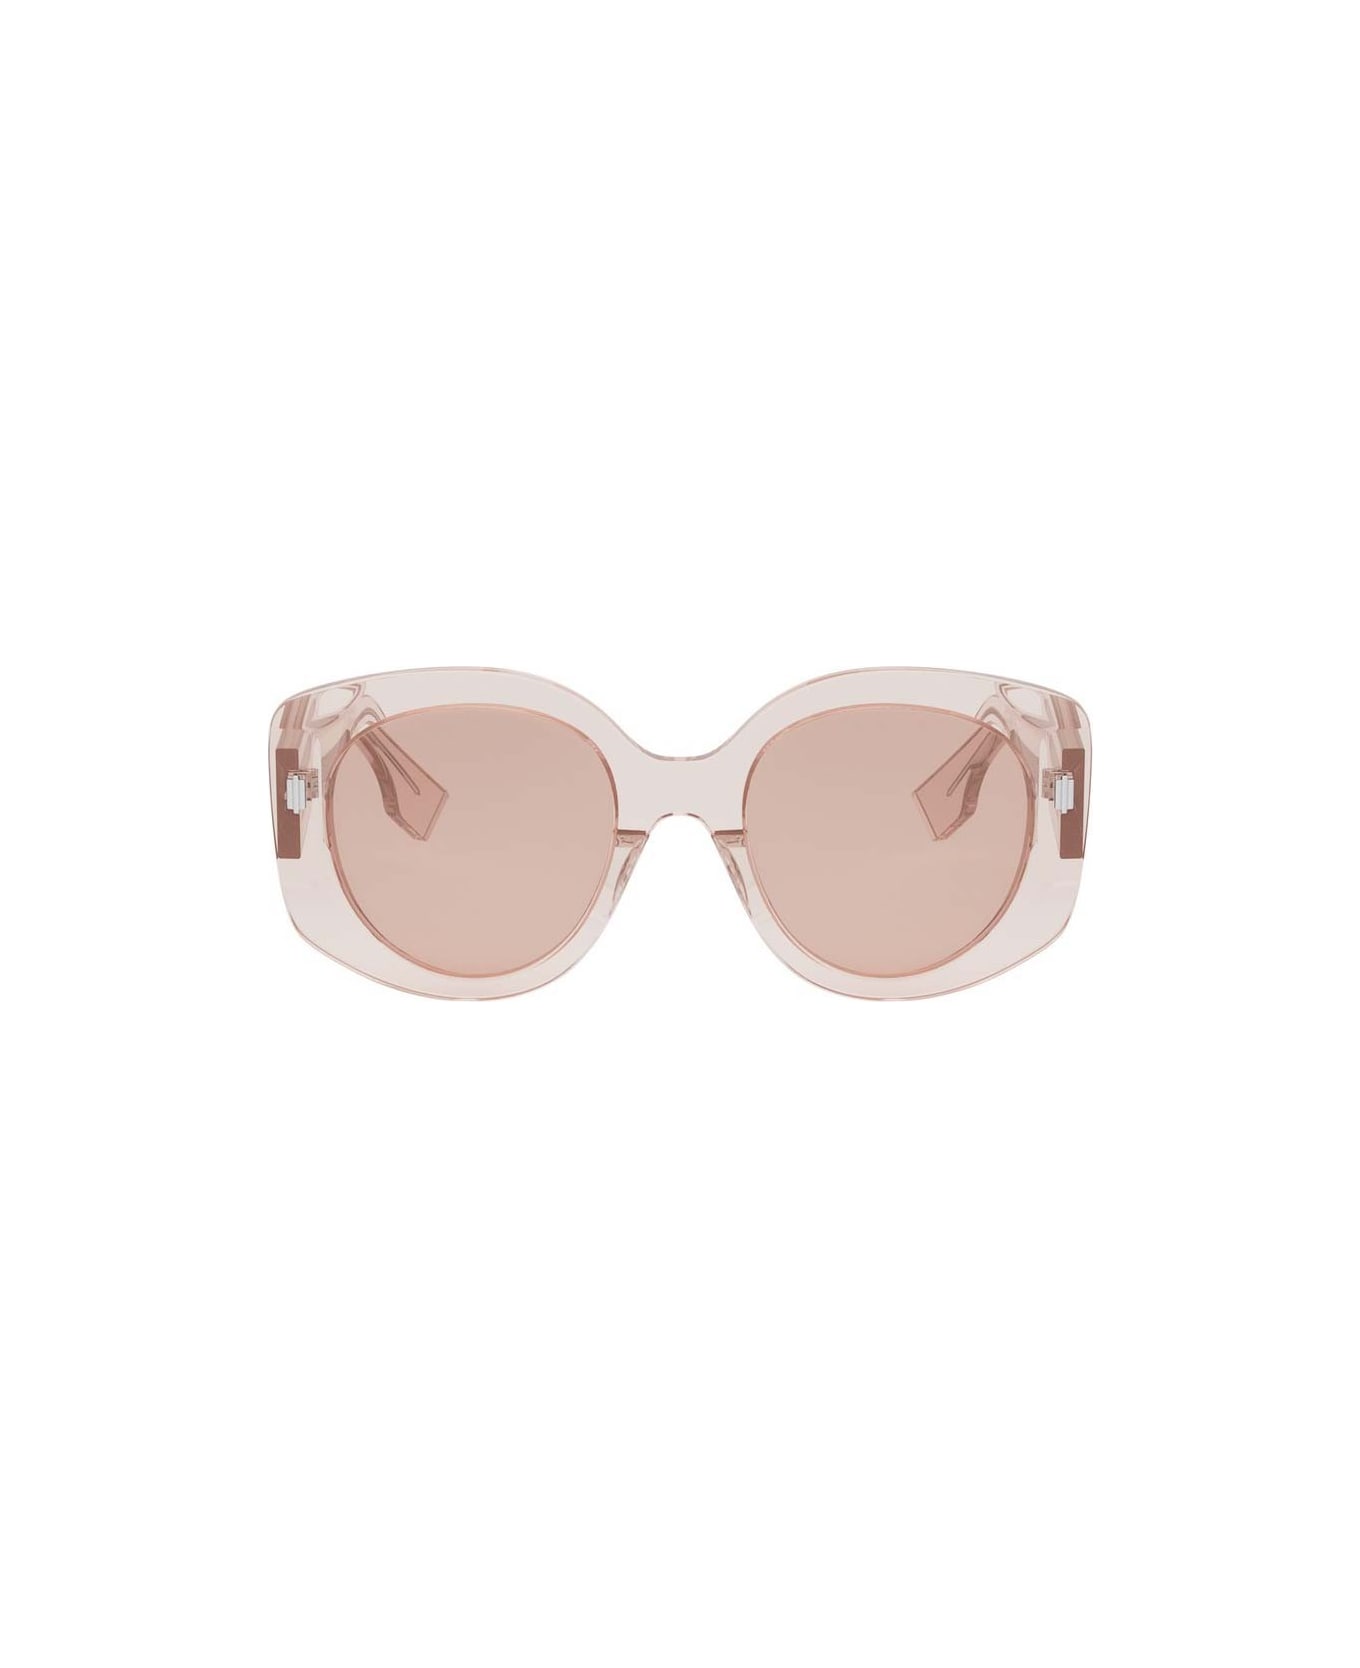 Fendi Eyewear Sunglasses - Rosa trasparente/Rosa サングラス